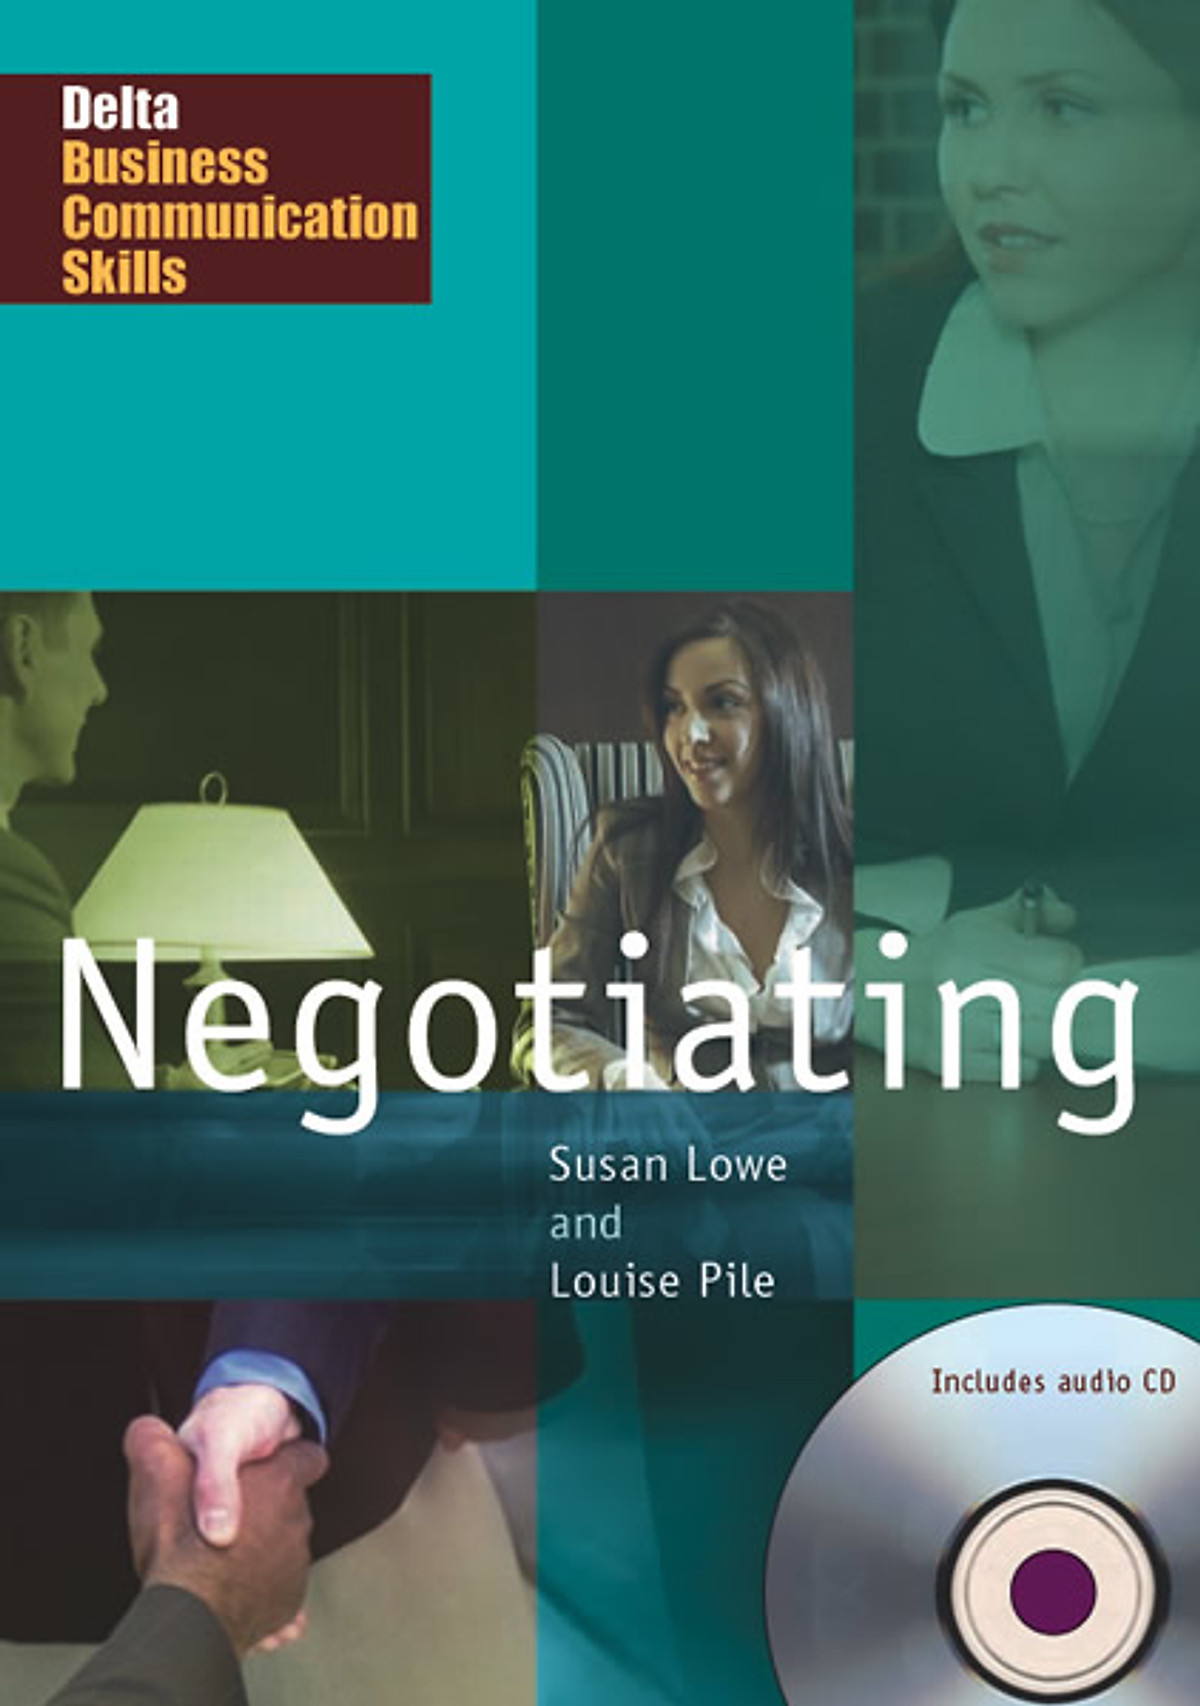 Delta Business Communication Skills (Asia Ed.): Negotiating - Paperback